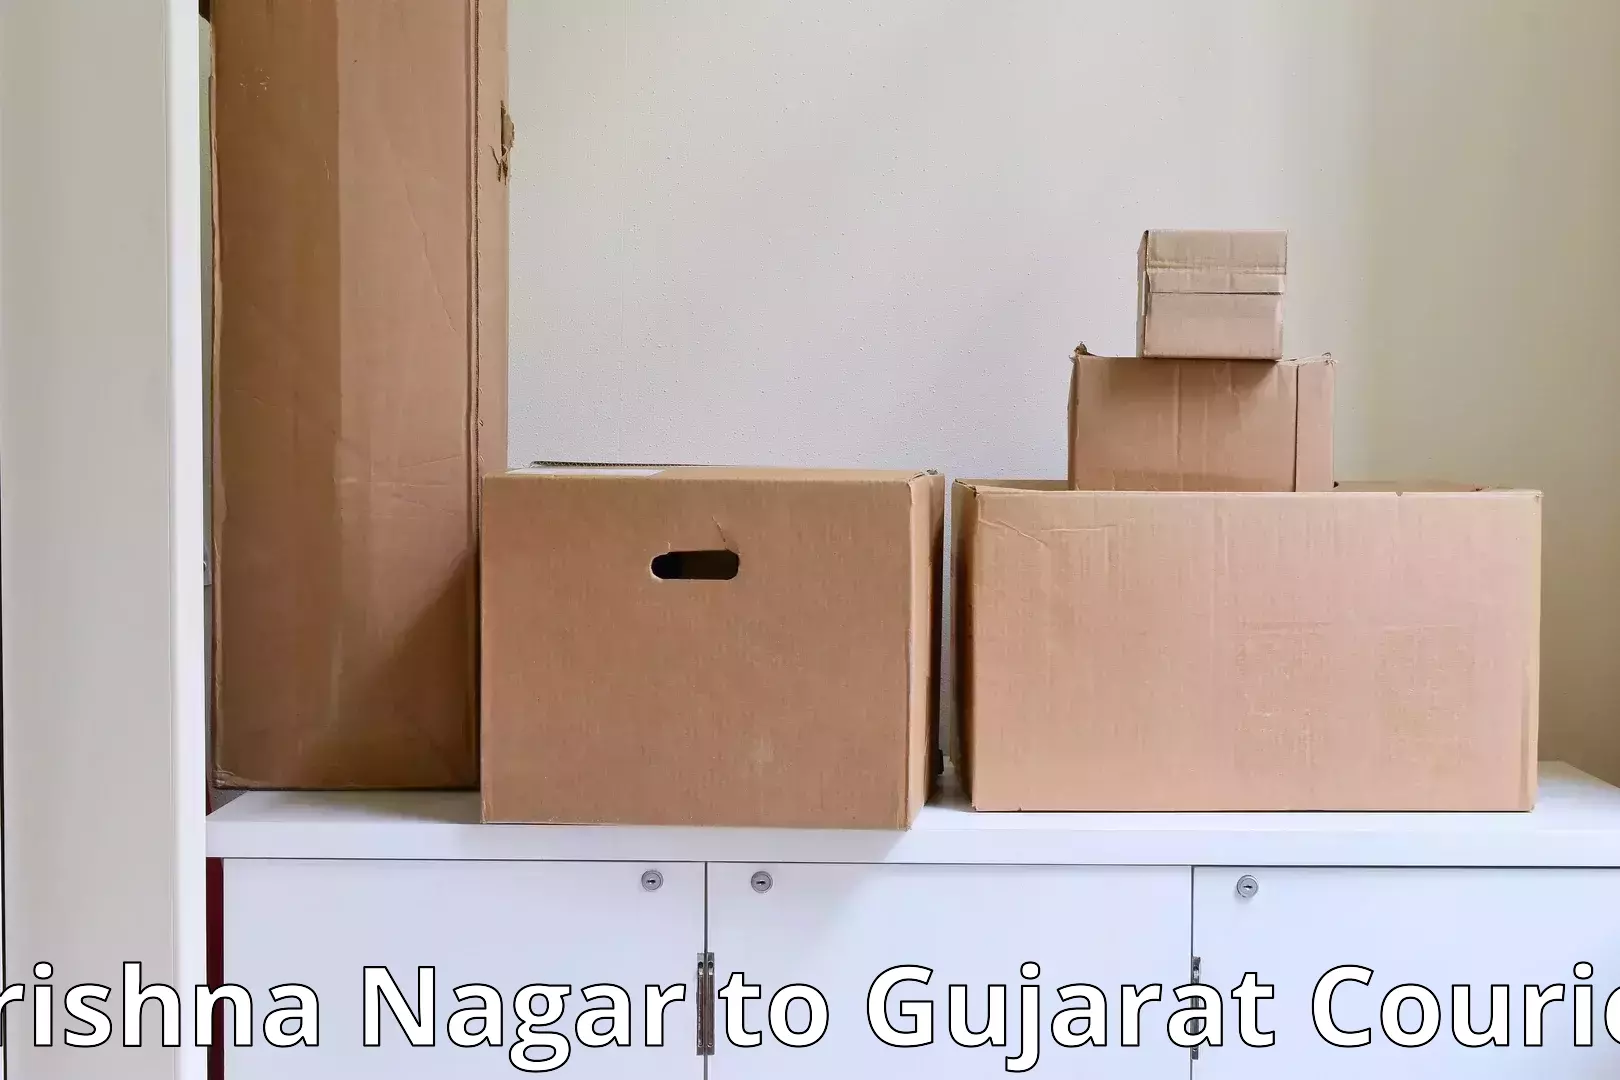 Hassle-free relocation in Krishna Nagar to Gujarat